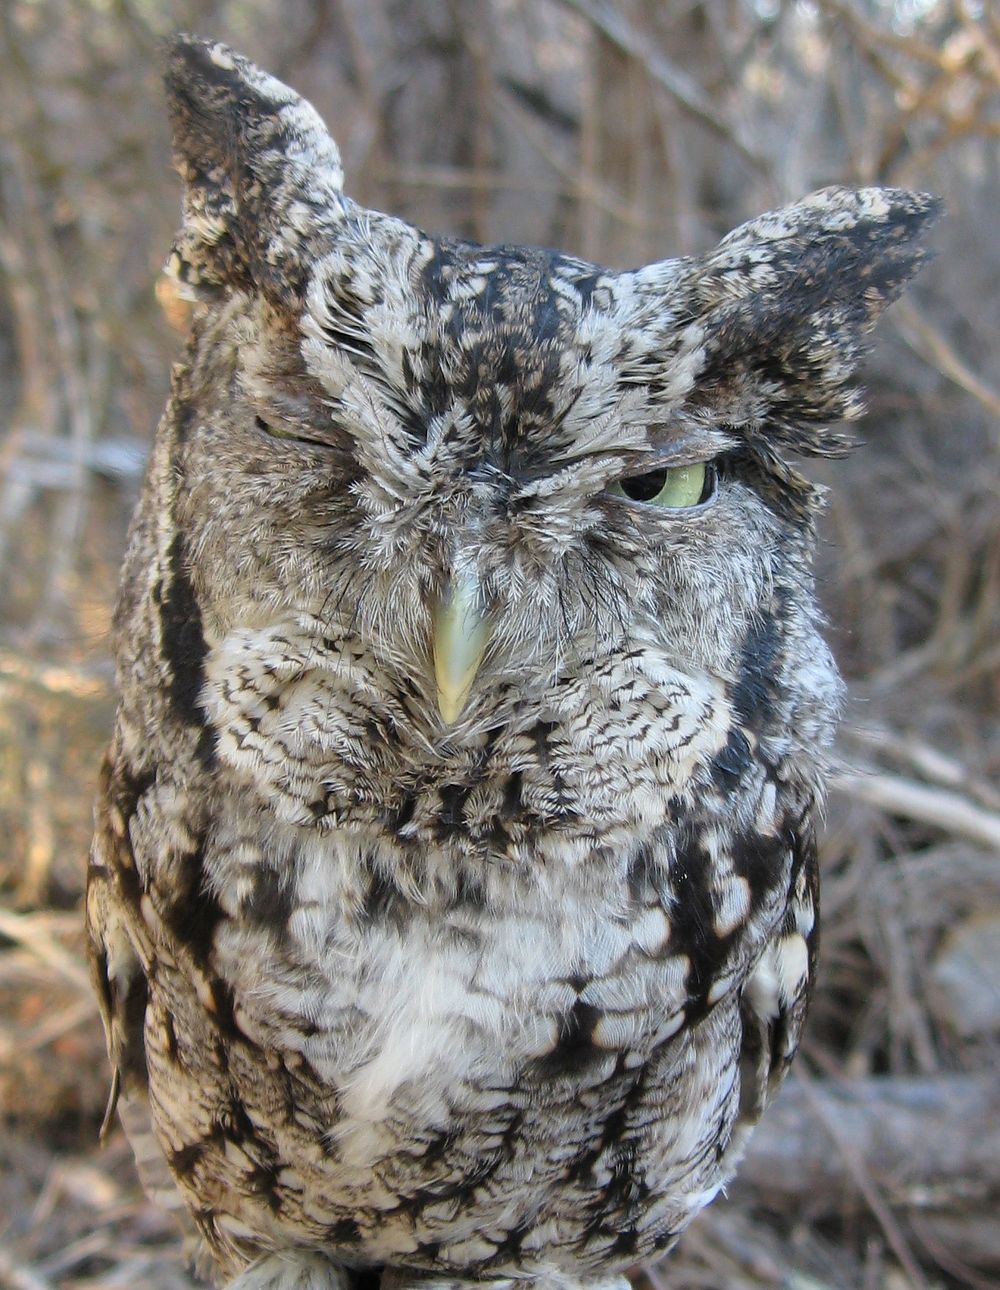 Eastern Screech-Owl, bird image. Free public domain CC0 photo.